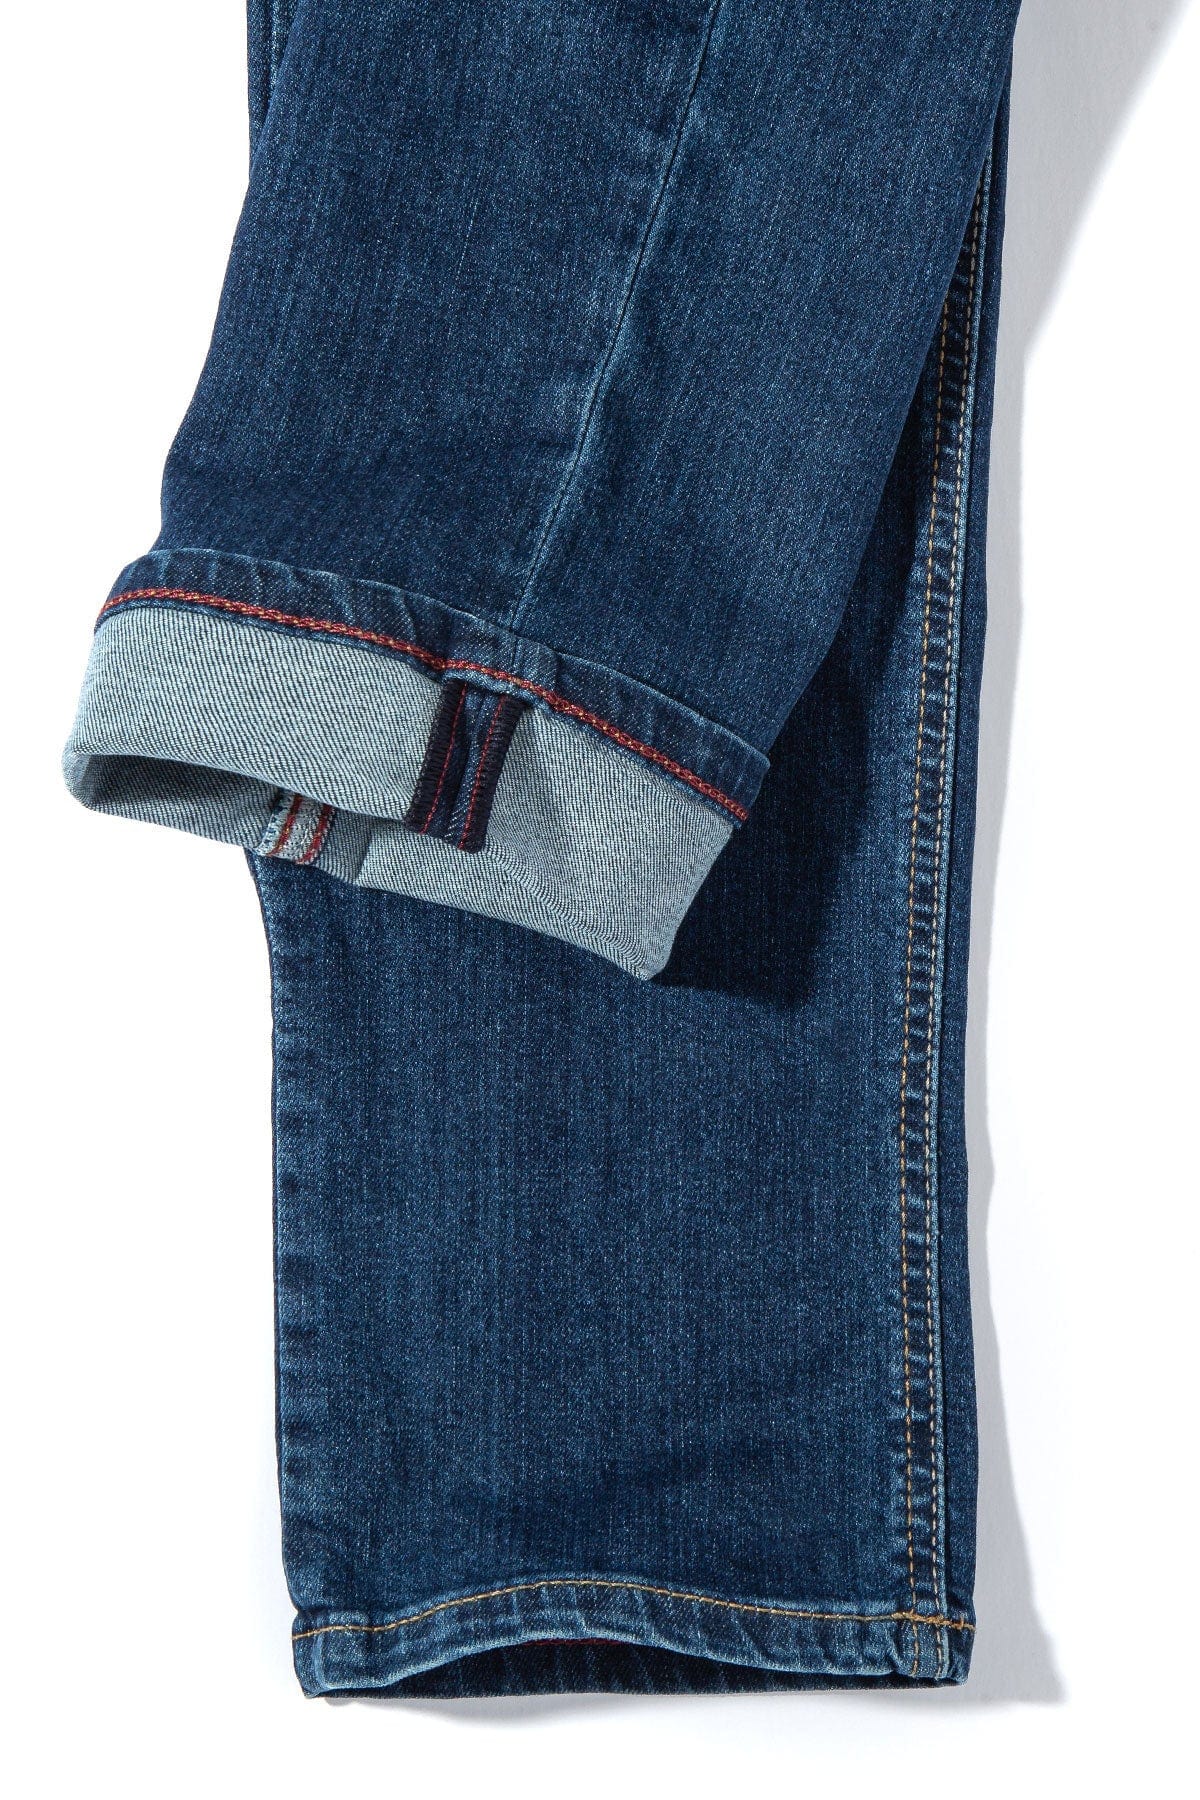 MAC Arne Pipe Jeans in Old Legend Wash - AXEL'S